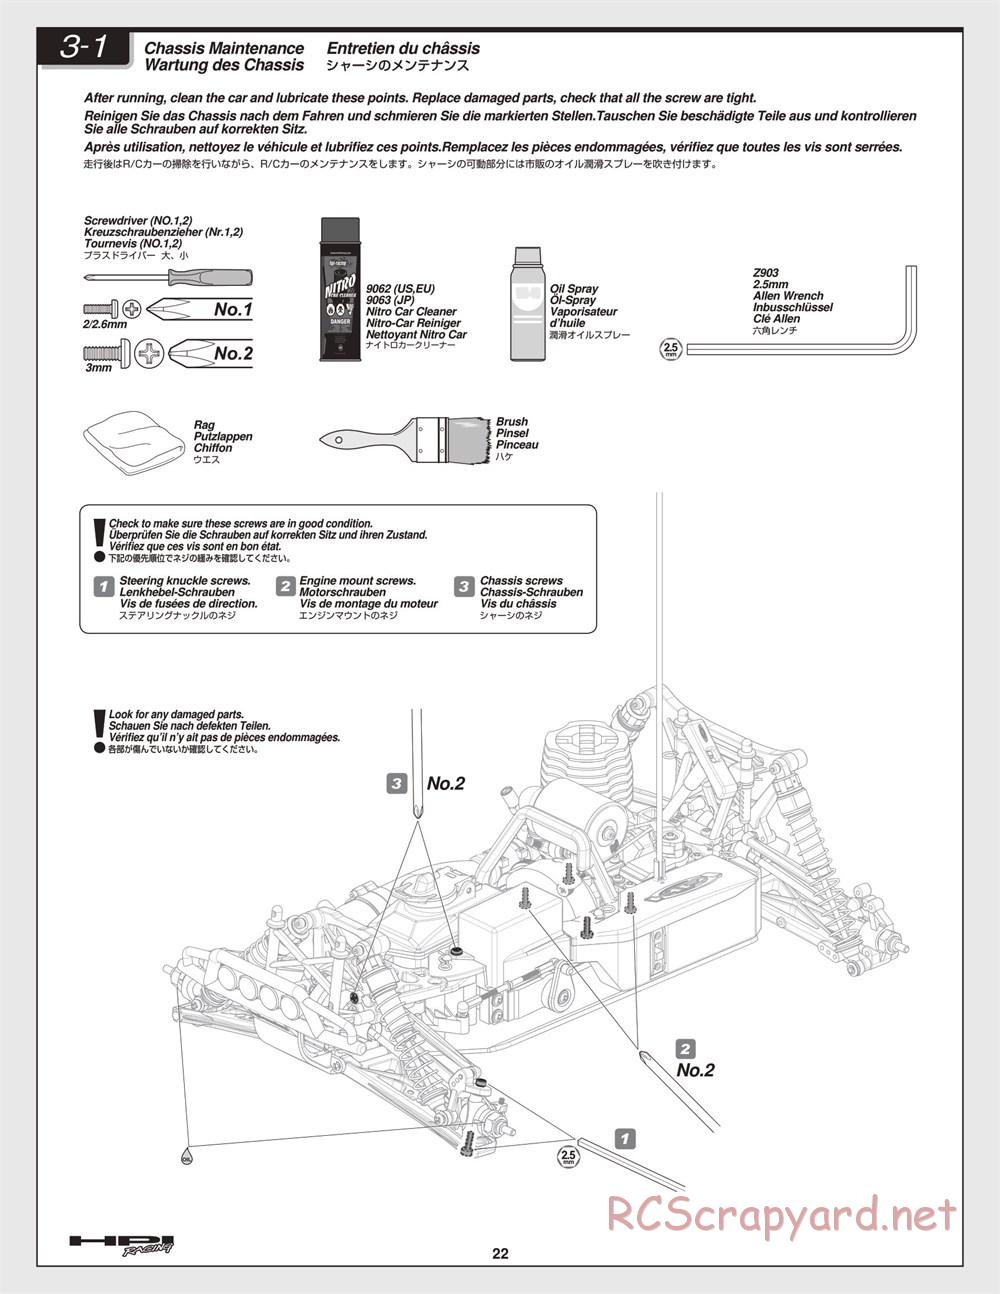 HPI - Nitro MT2 G3.0 - Manual - Page 22